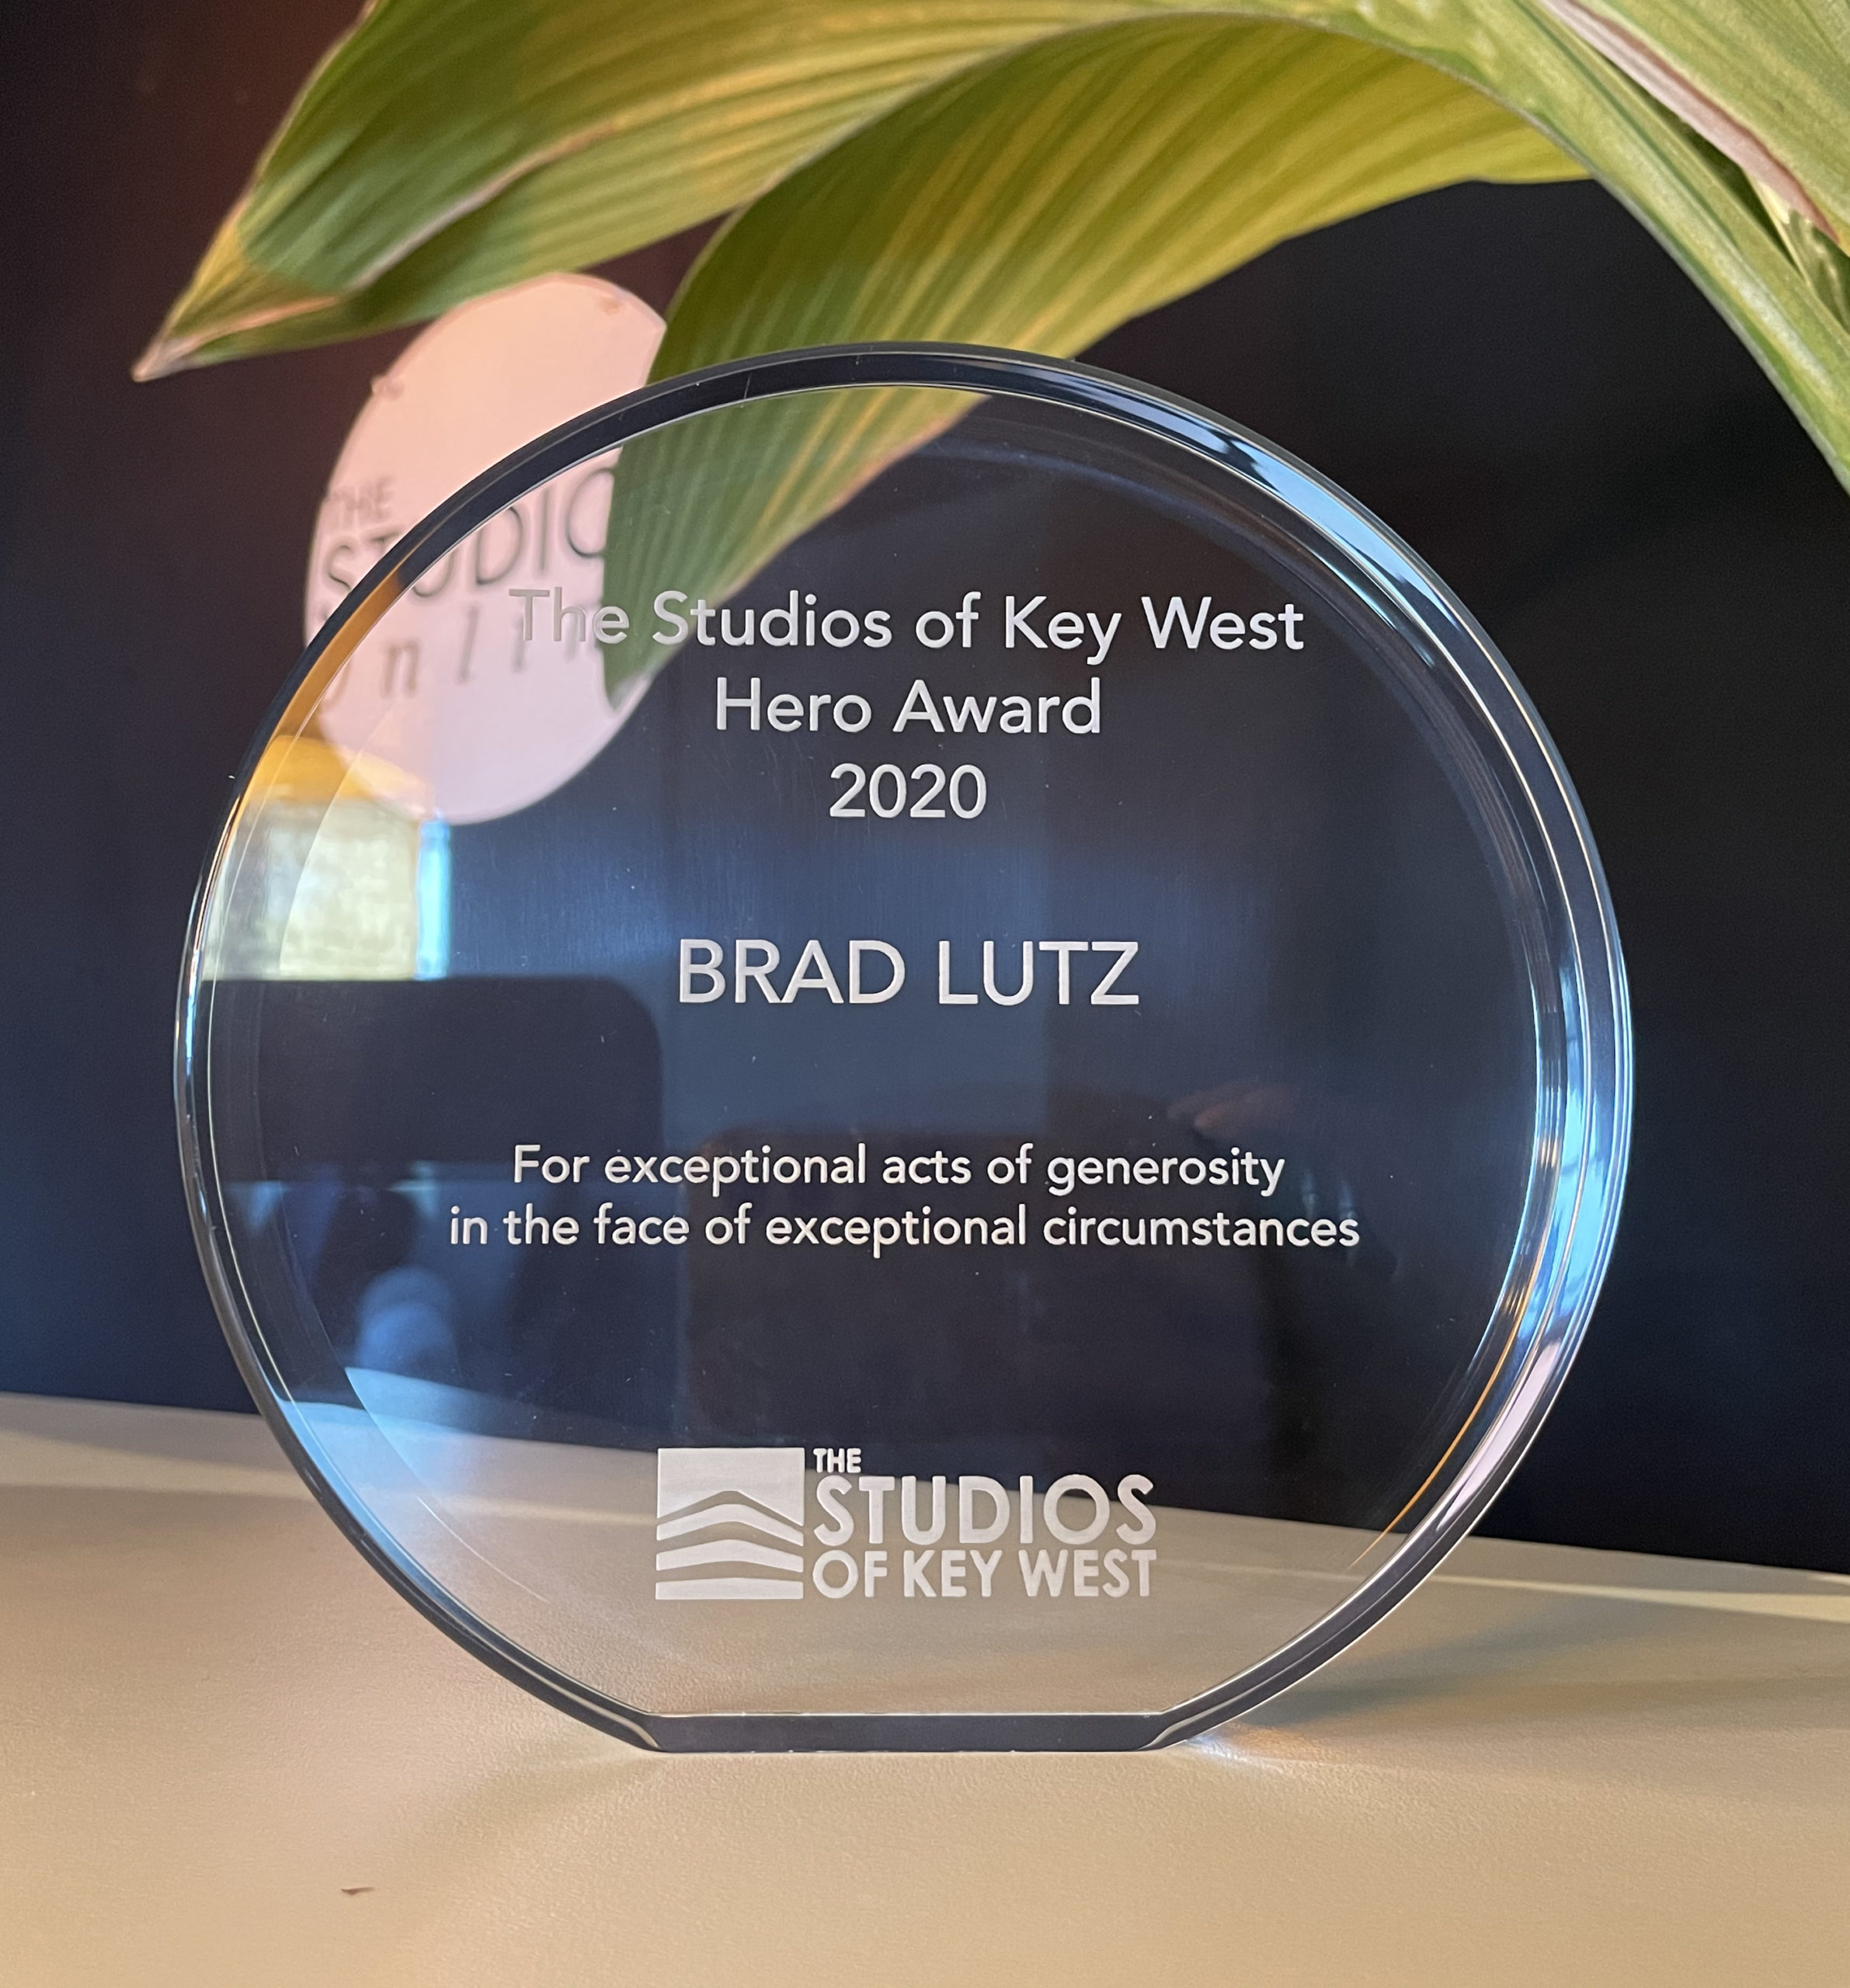 Brad Lutz's award from the Studios of Key West